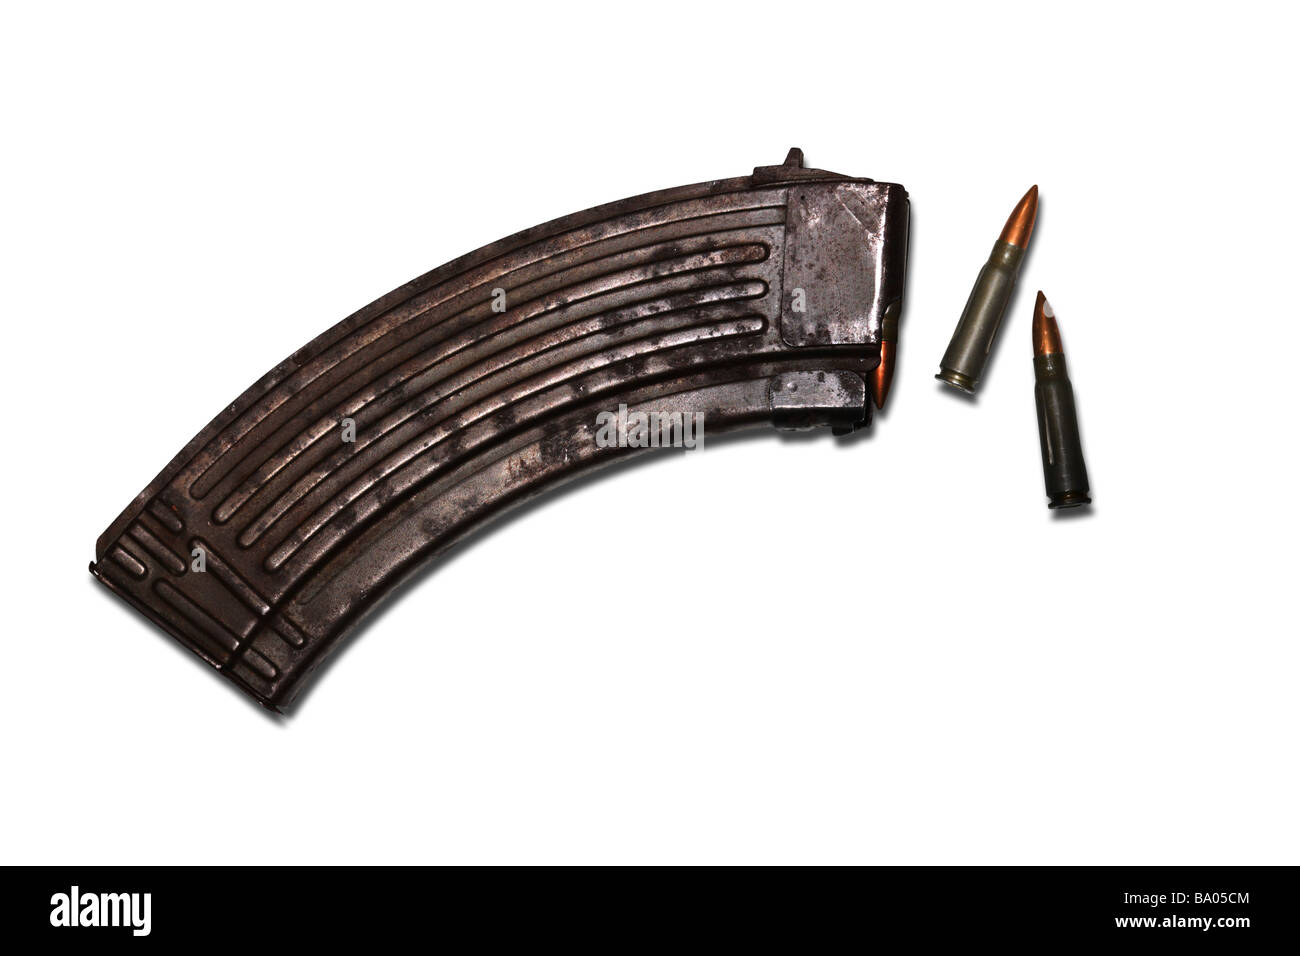 AK47 machine gun clip with rounds on white background Stock Photo